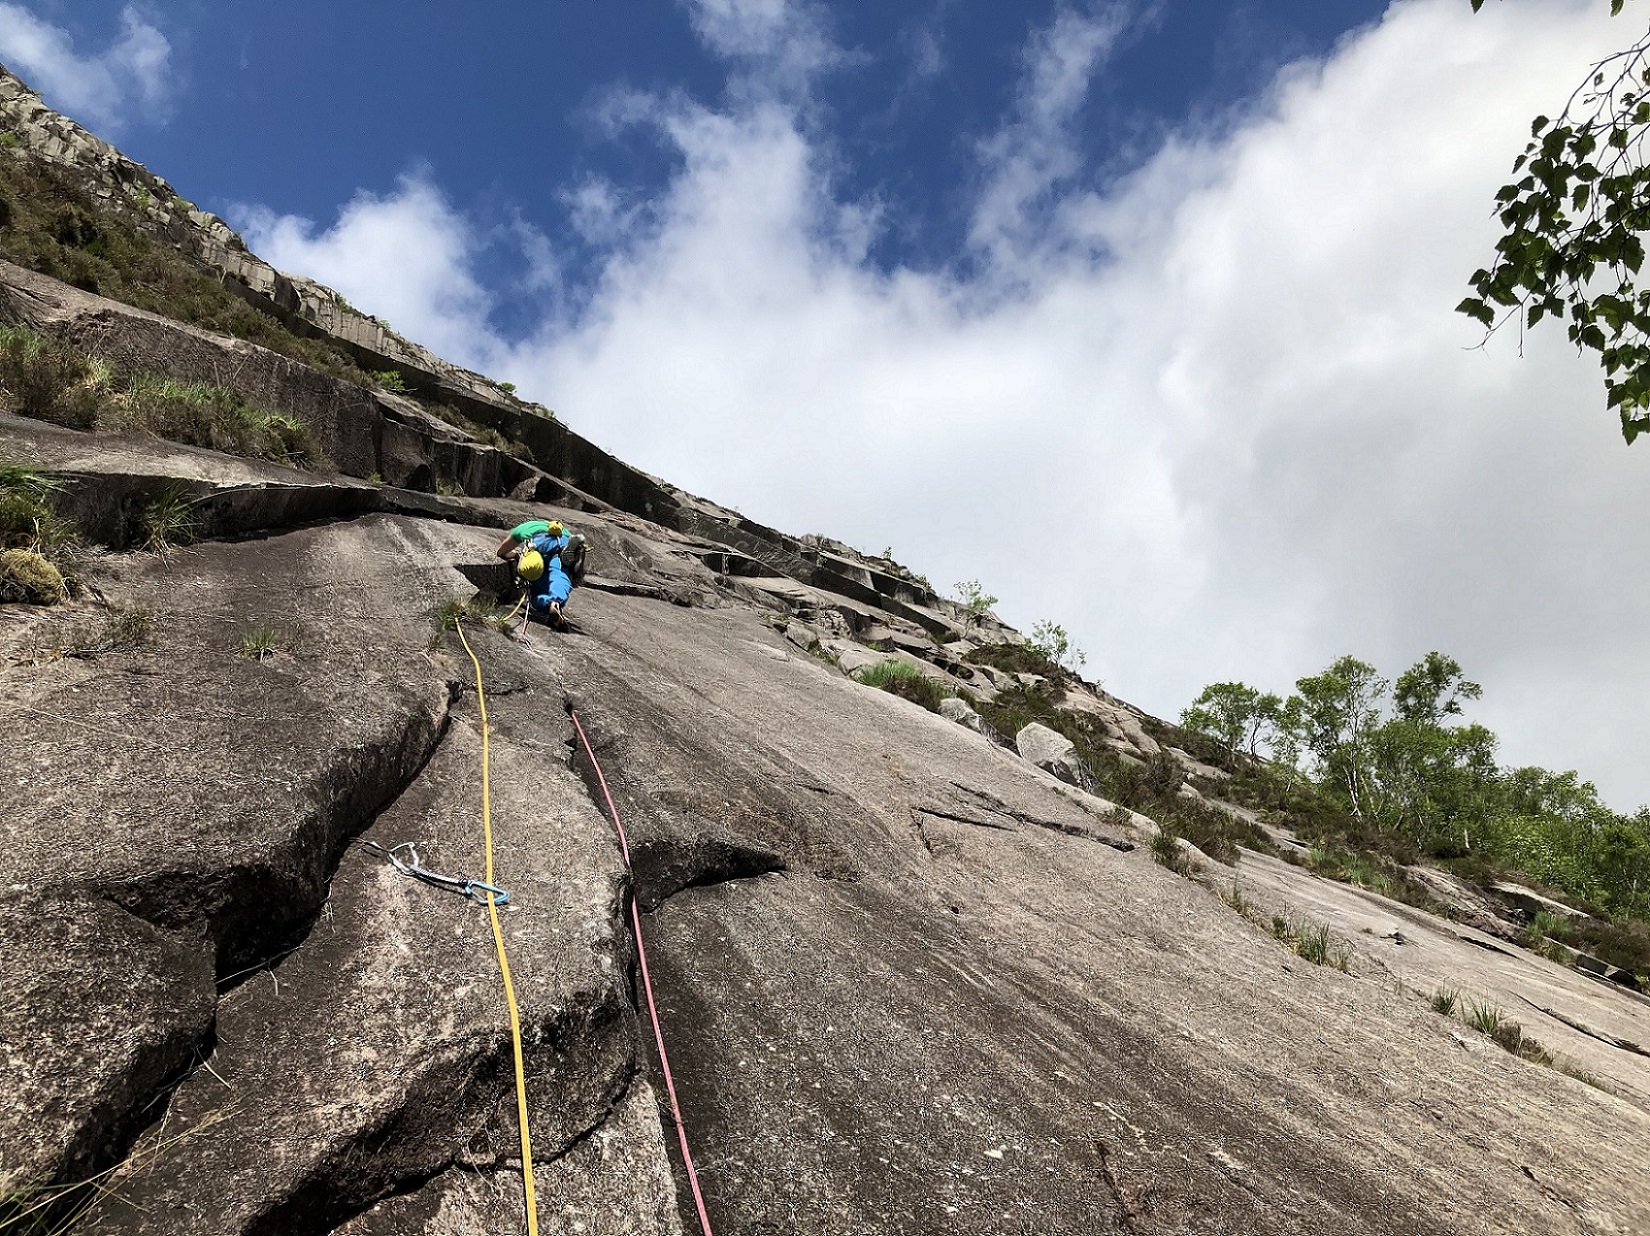 scottish summer rock climbing on the pause etive slabs